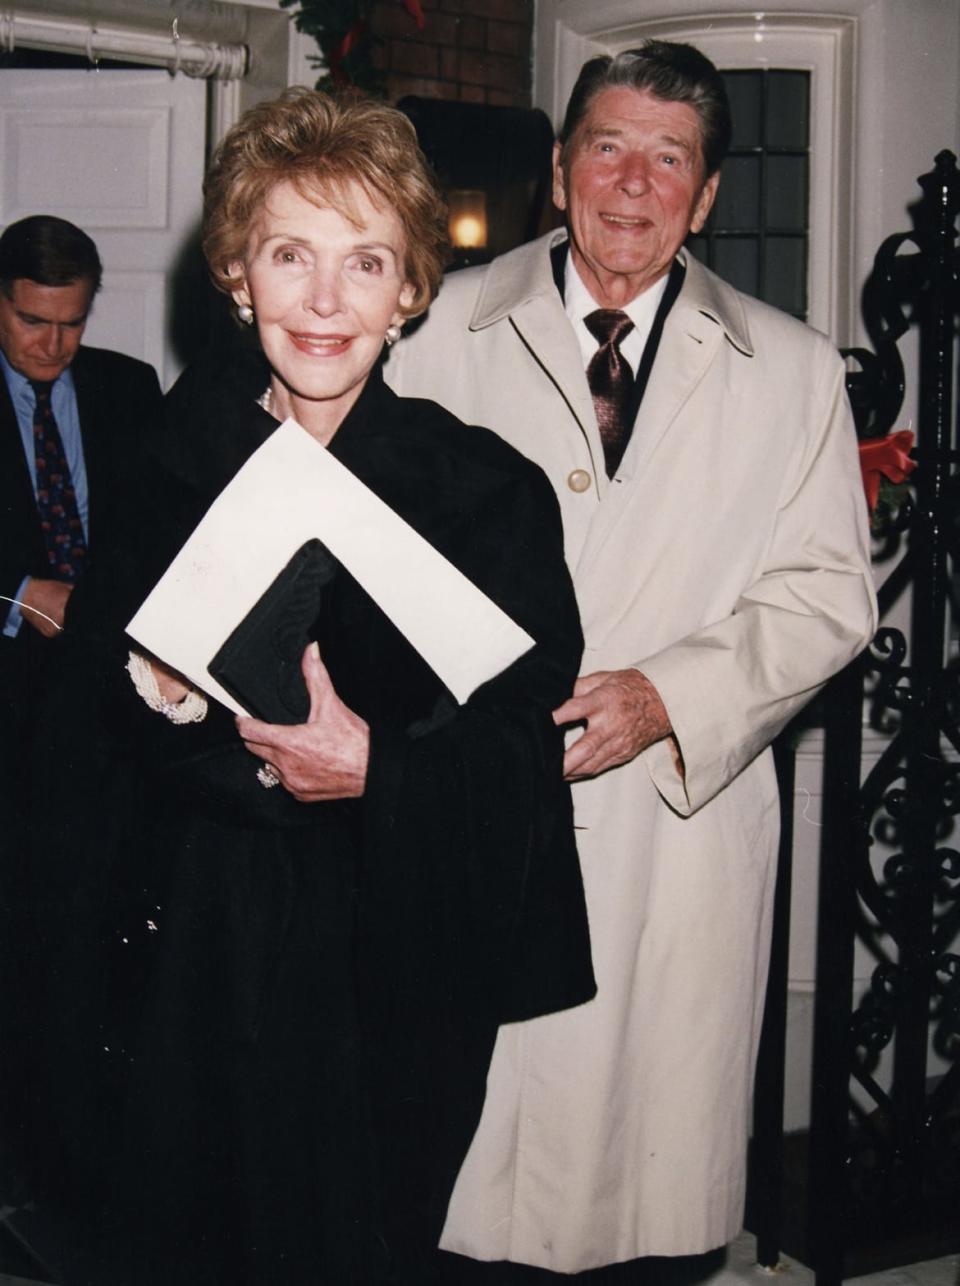 Ronald Reagan standing behind Nancy in 1992